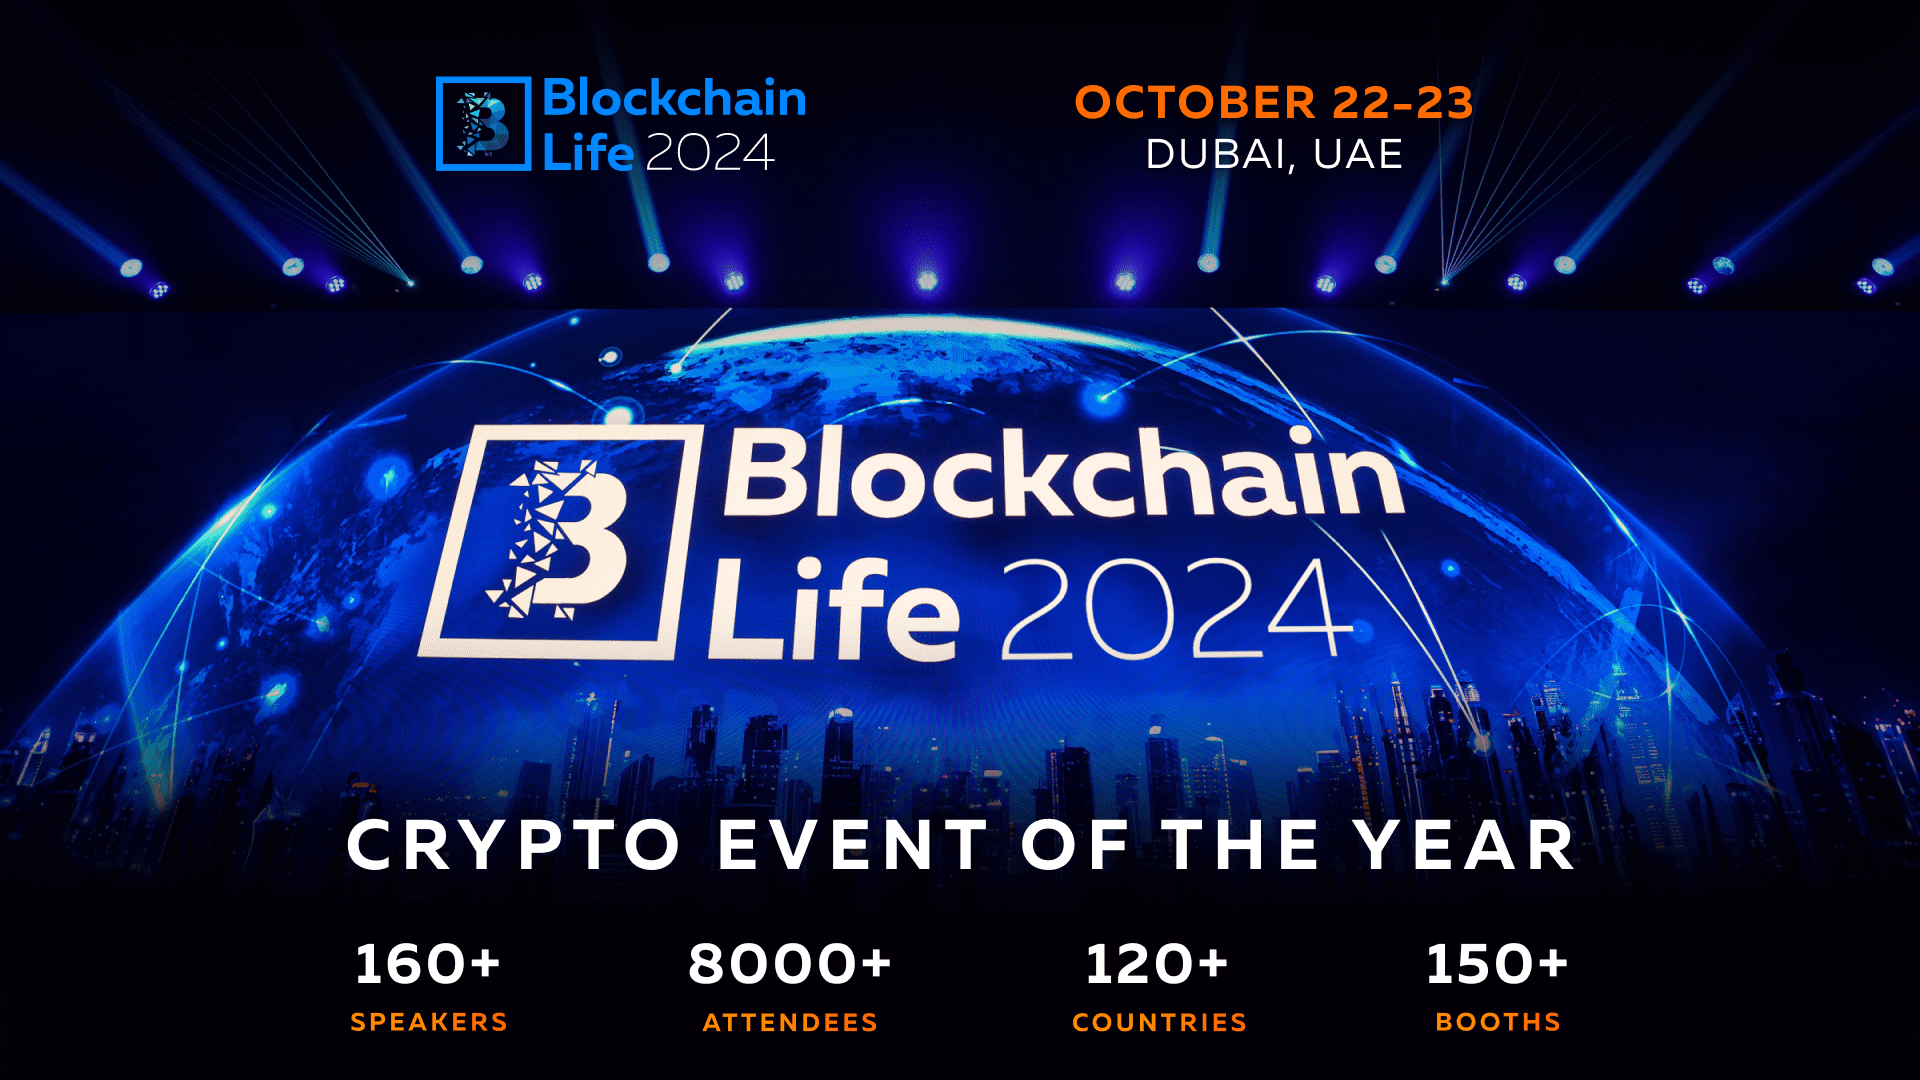 Blockchain Life 2024 organized by Blockchain Life